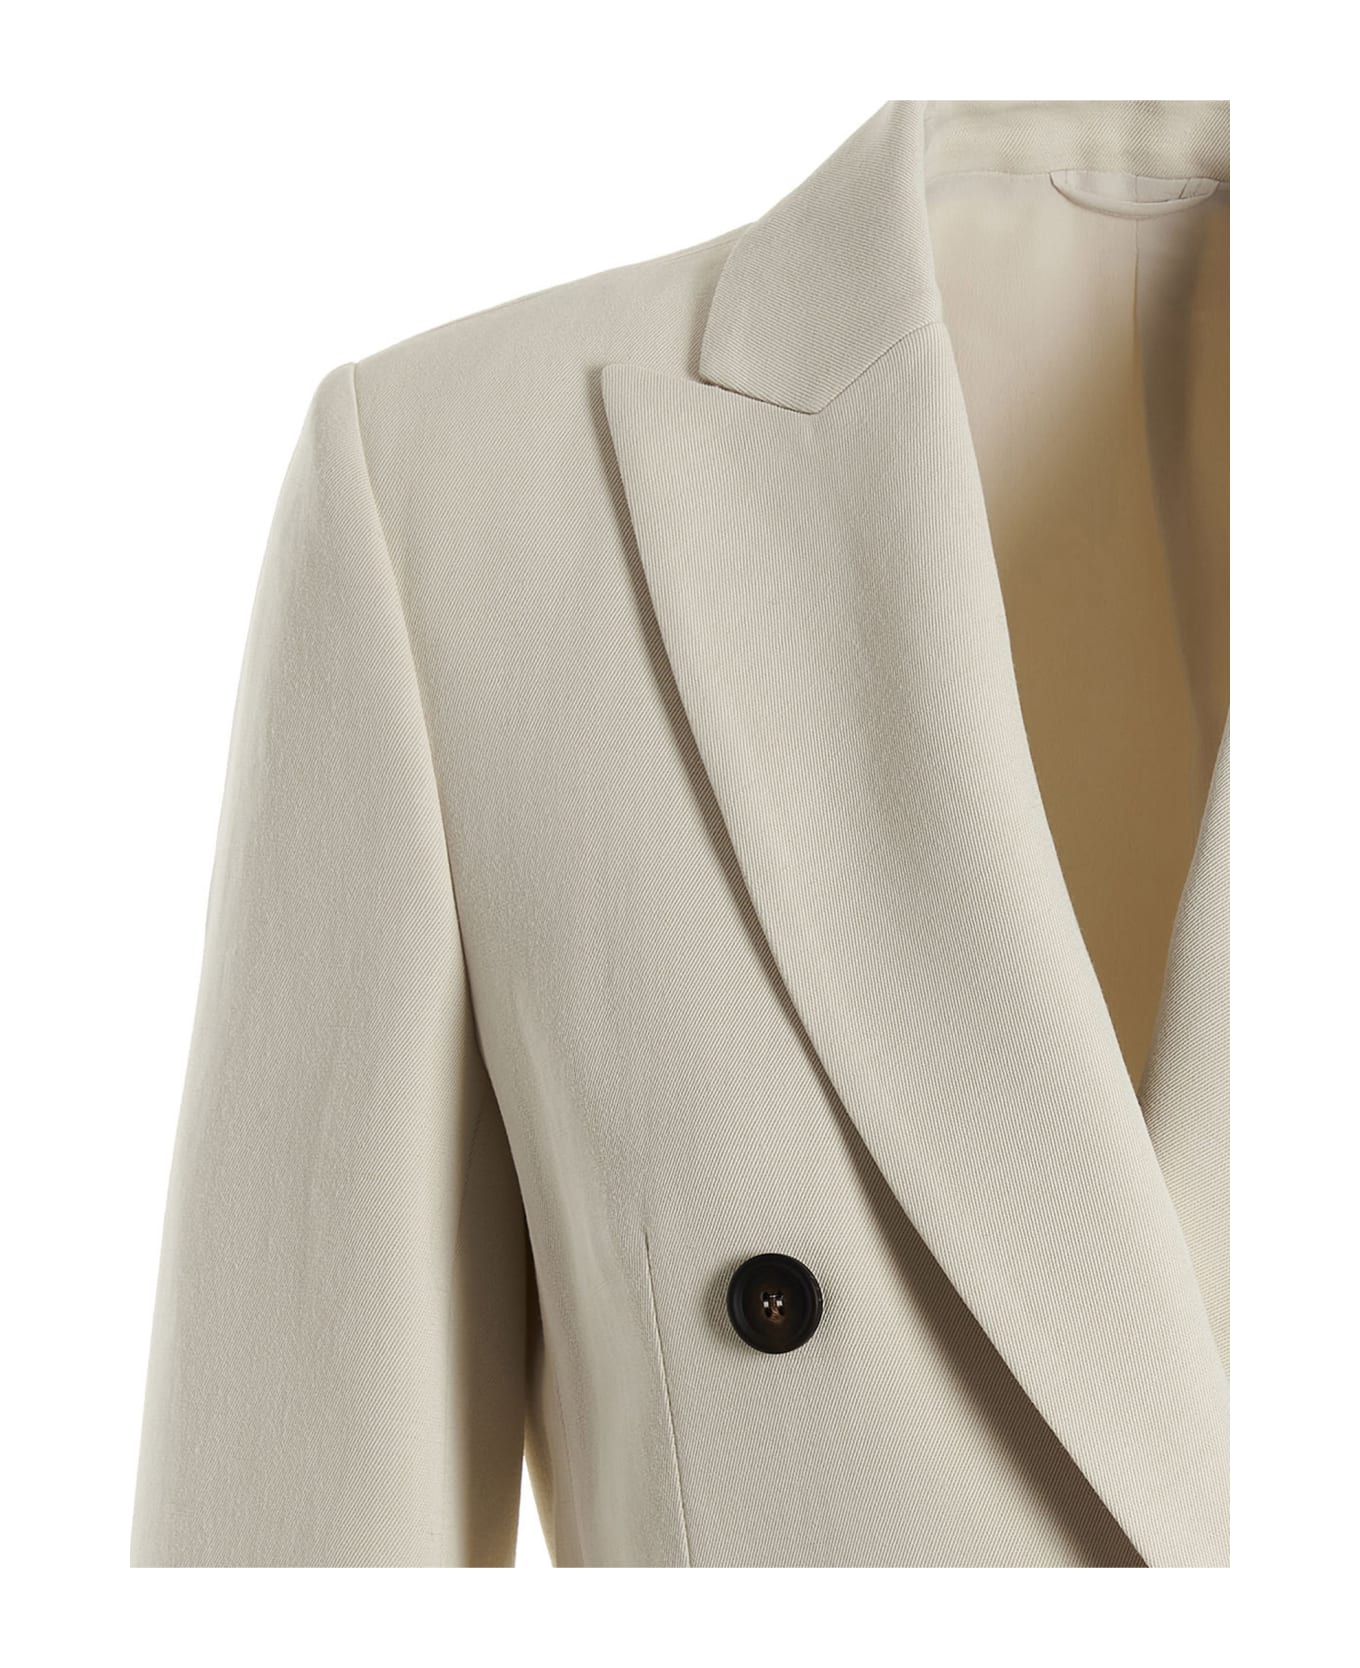 Brunello Cucinelli Double Breast Blazer Jacket - White